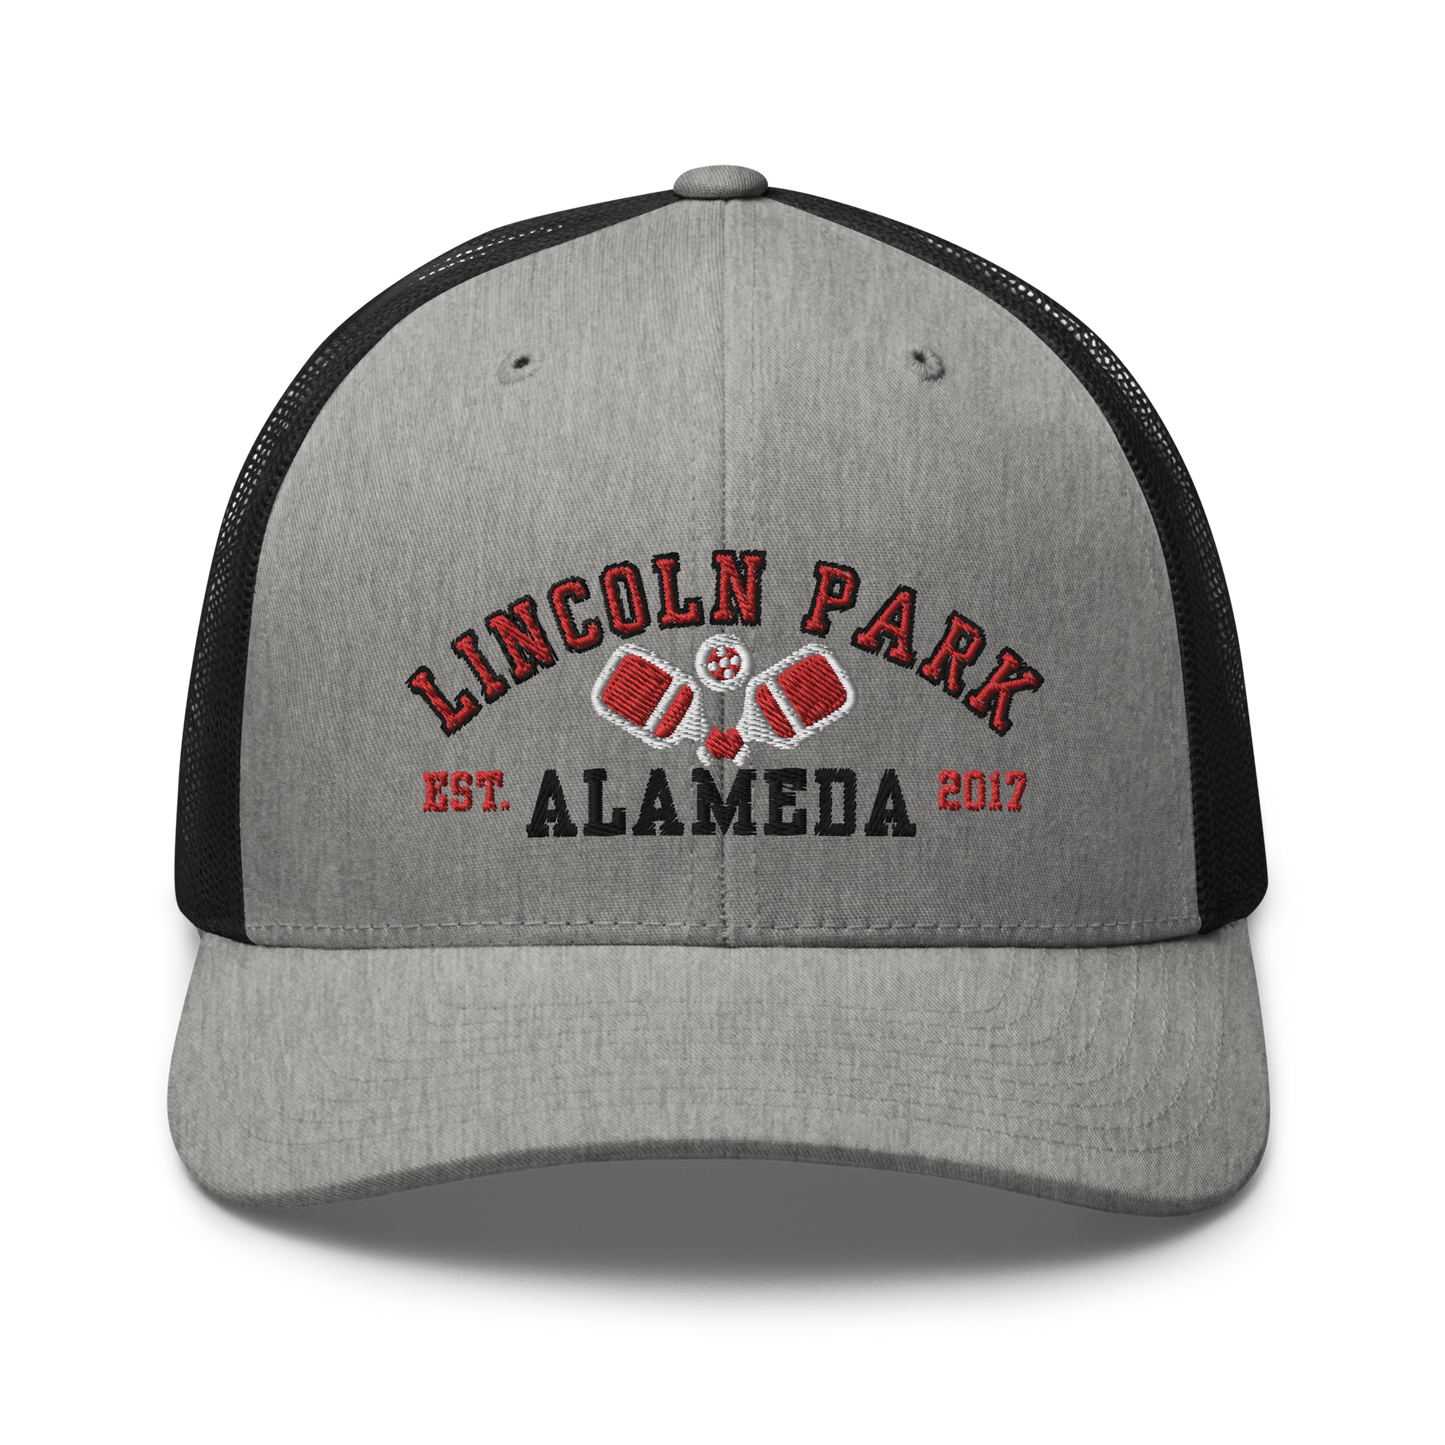 Alameda Pickleball CrossPaddles Solid - Retro Trucker Hat (Yupoong) MJ 239